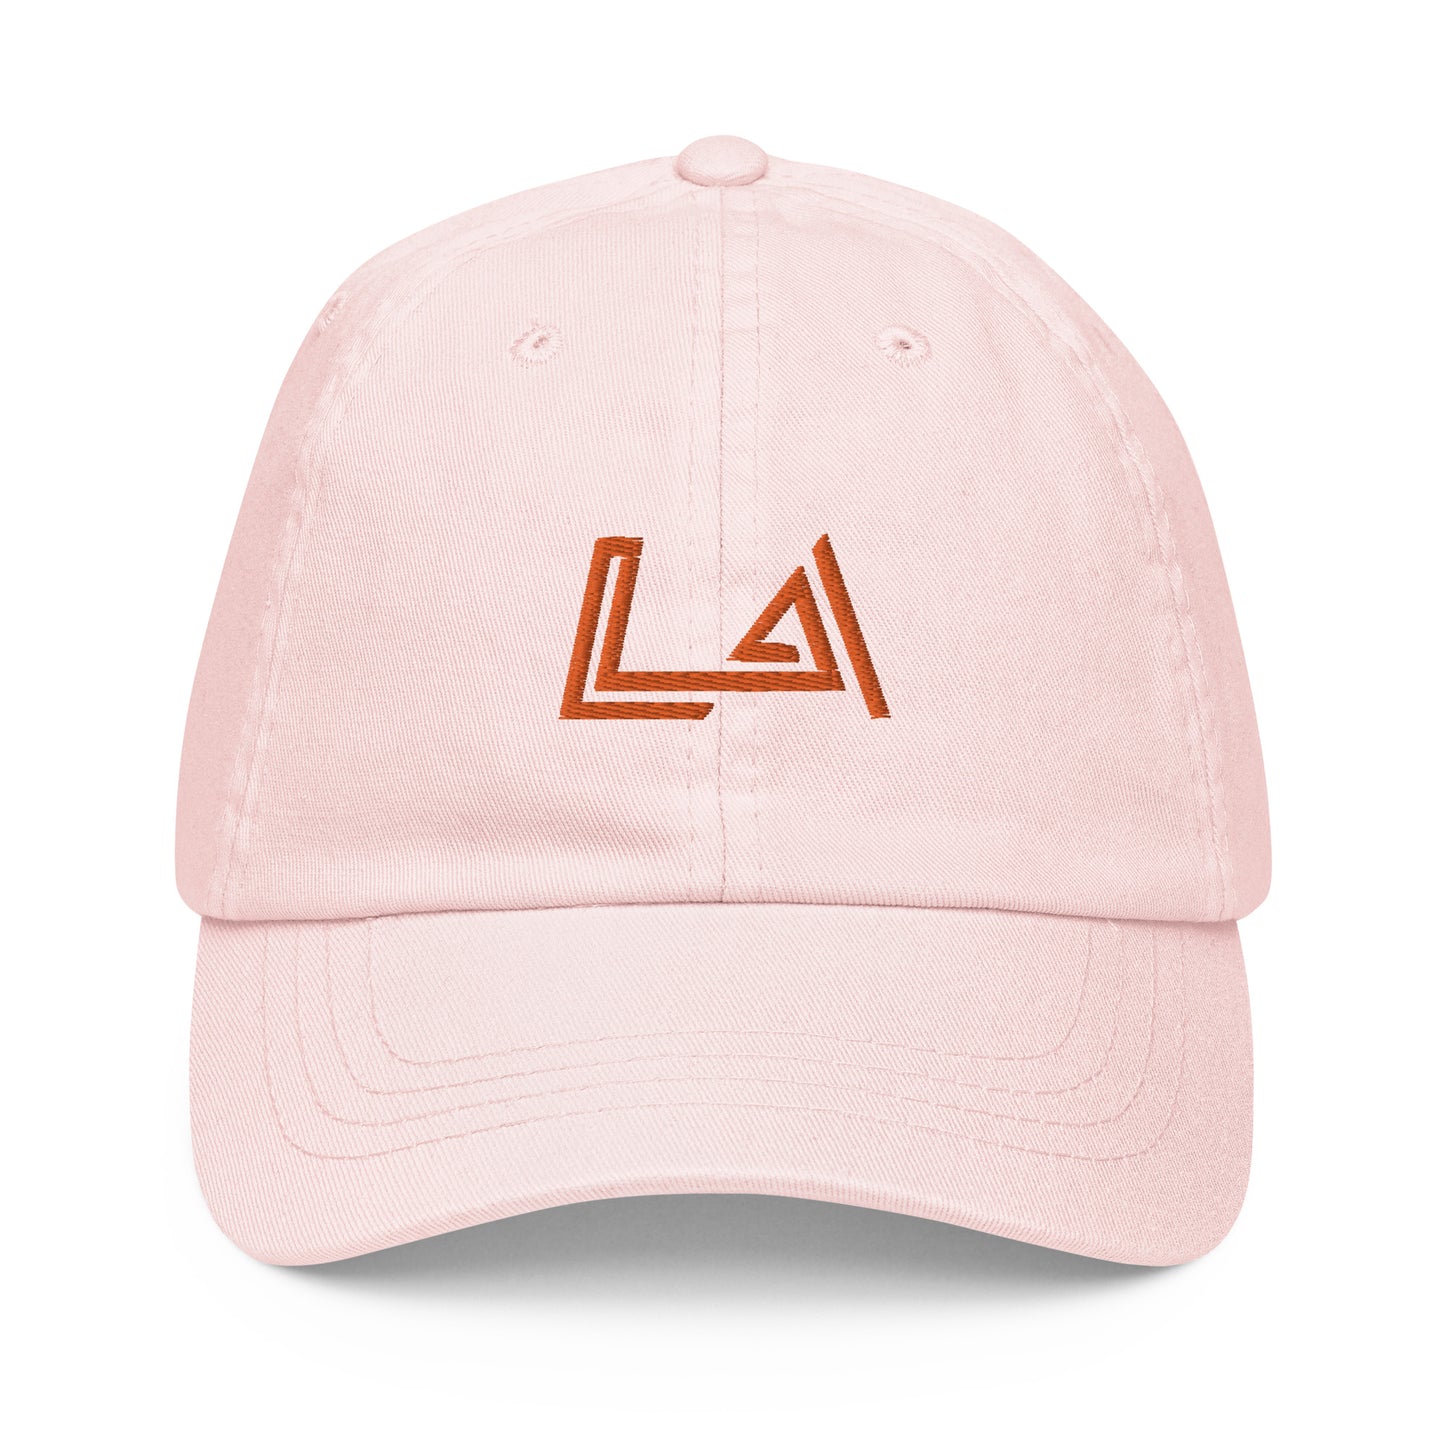 LA pastel baseball hat